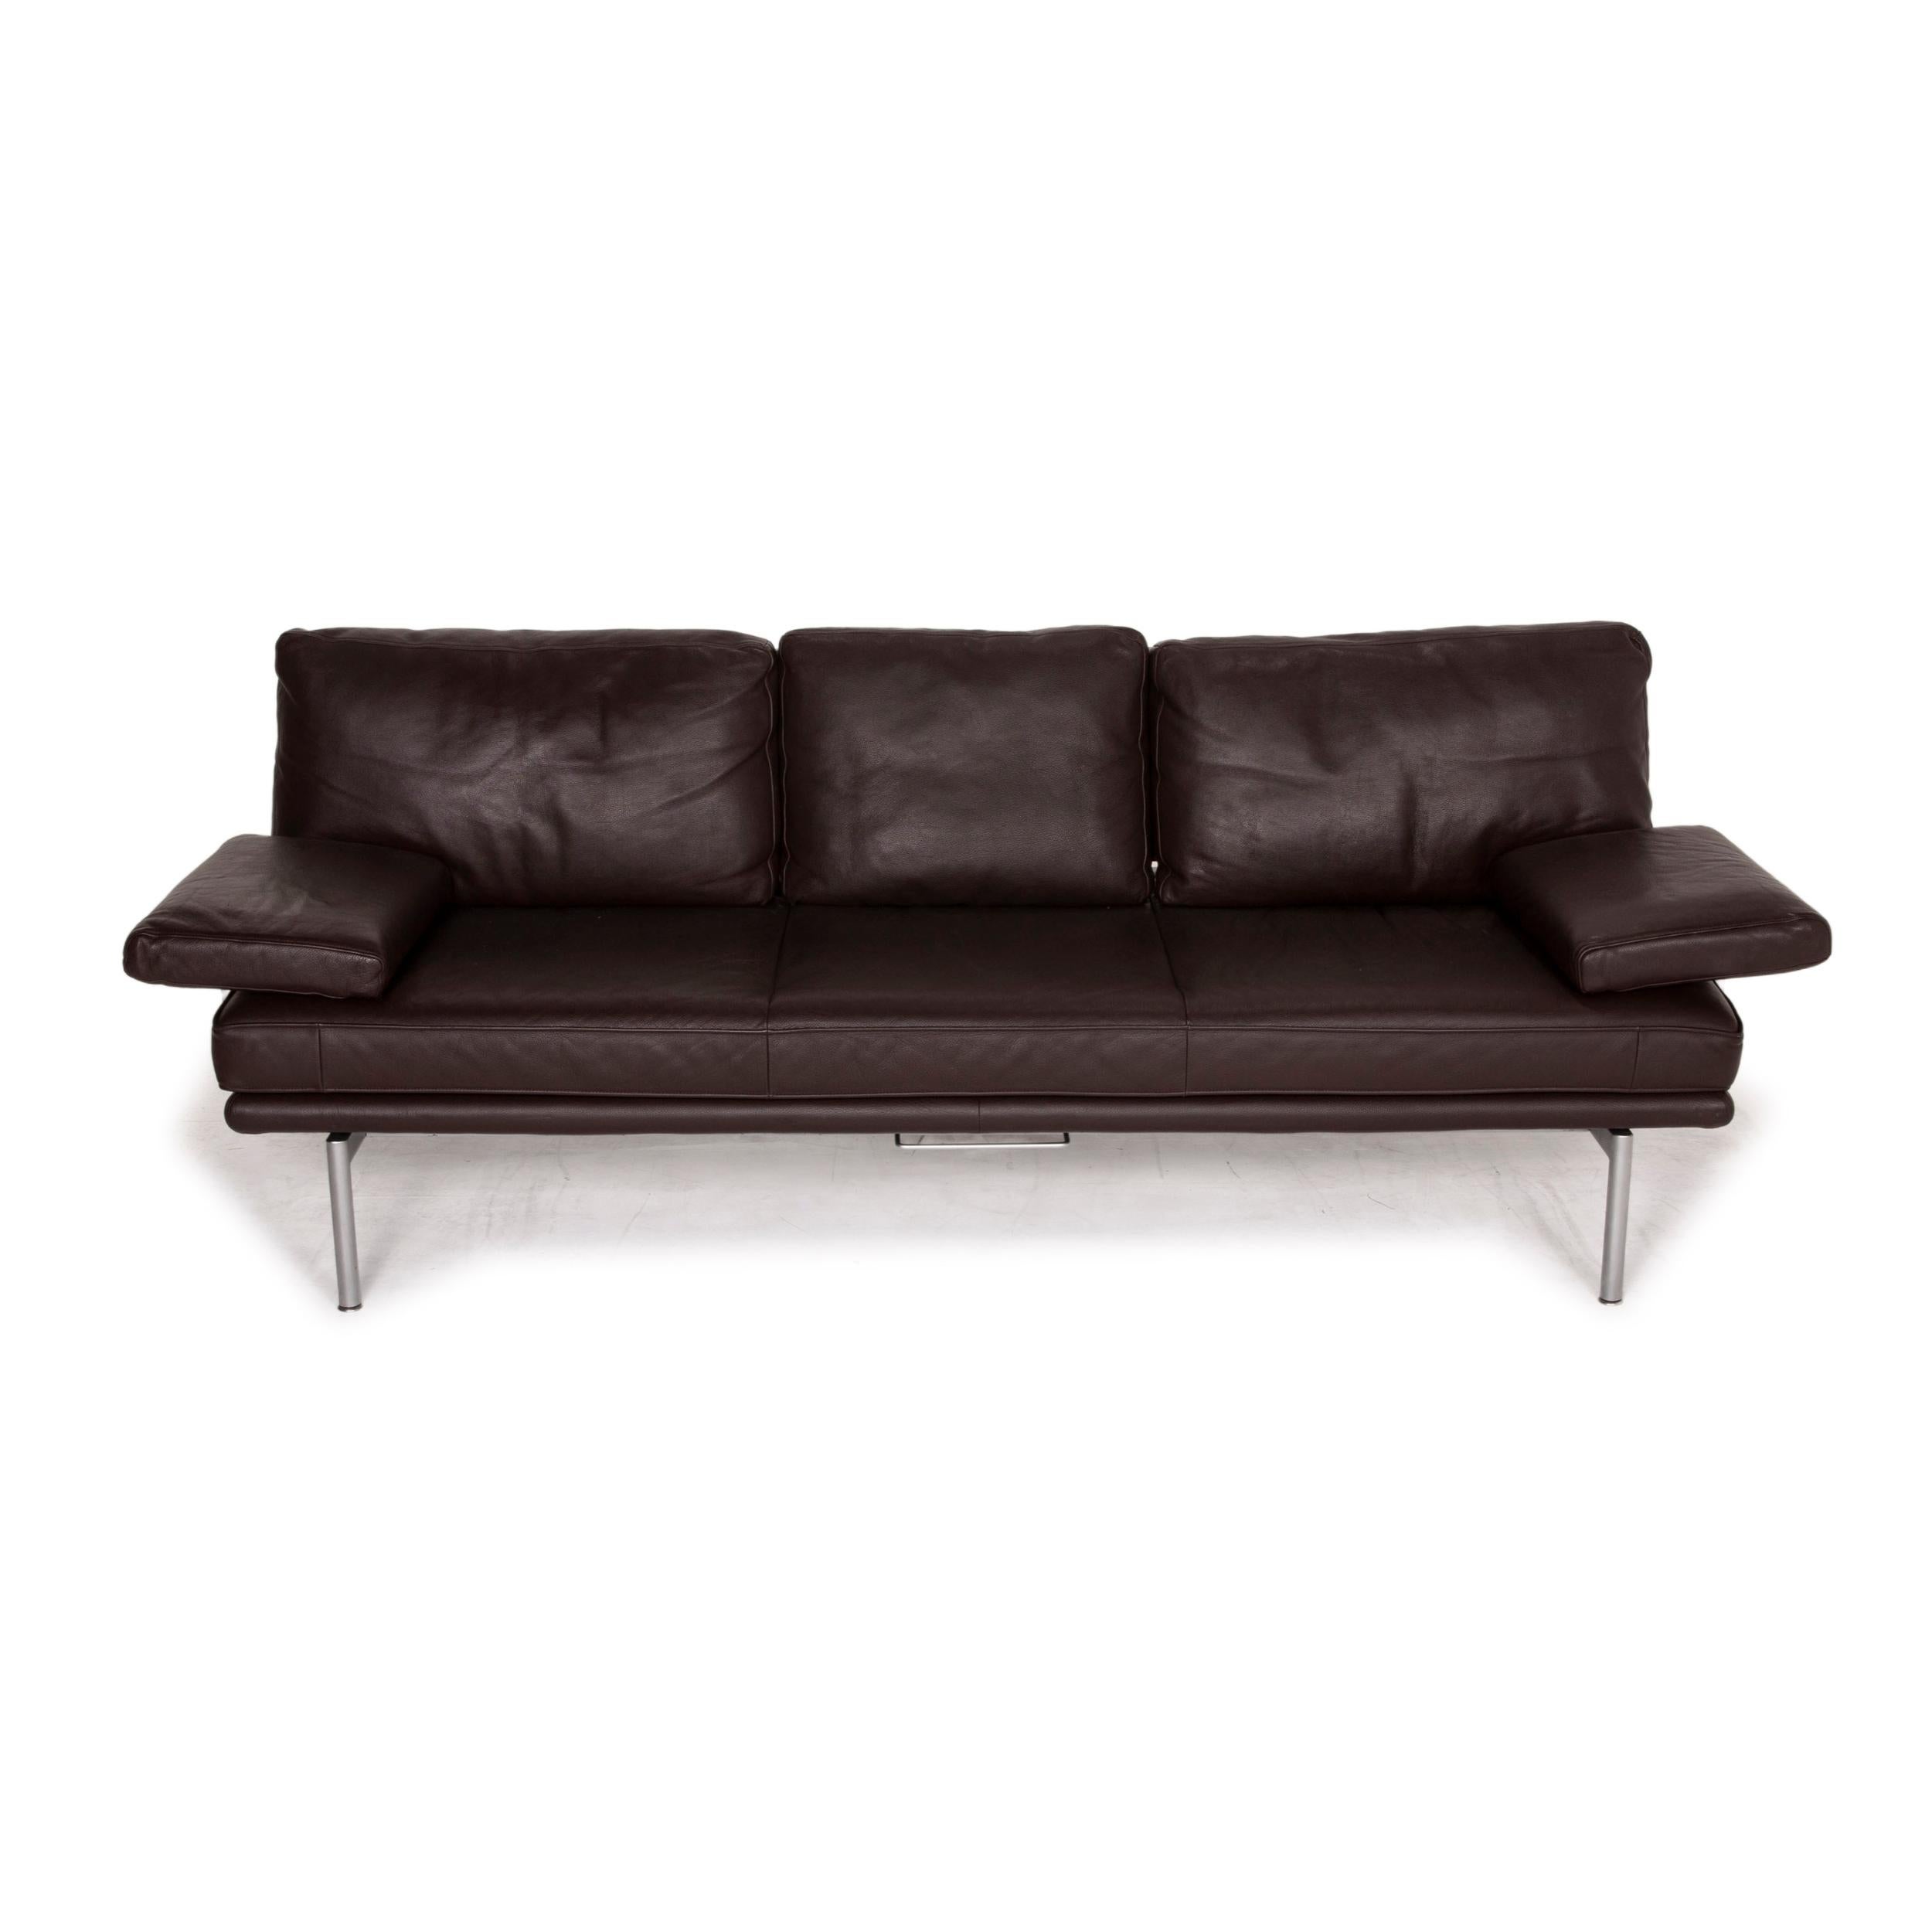 Walter Knoll Living Platform Leather Sofa Brown Three-Seater Function Dark Brown 2